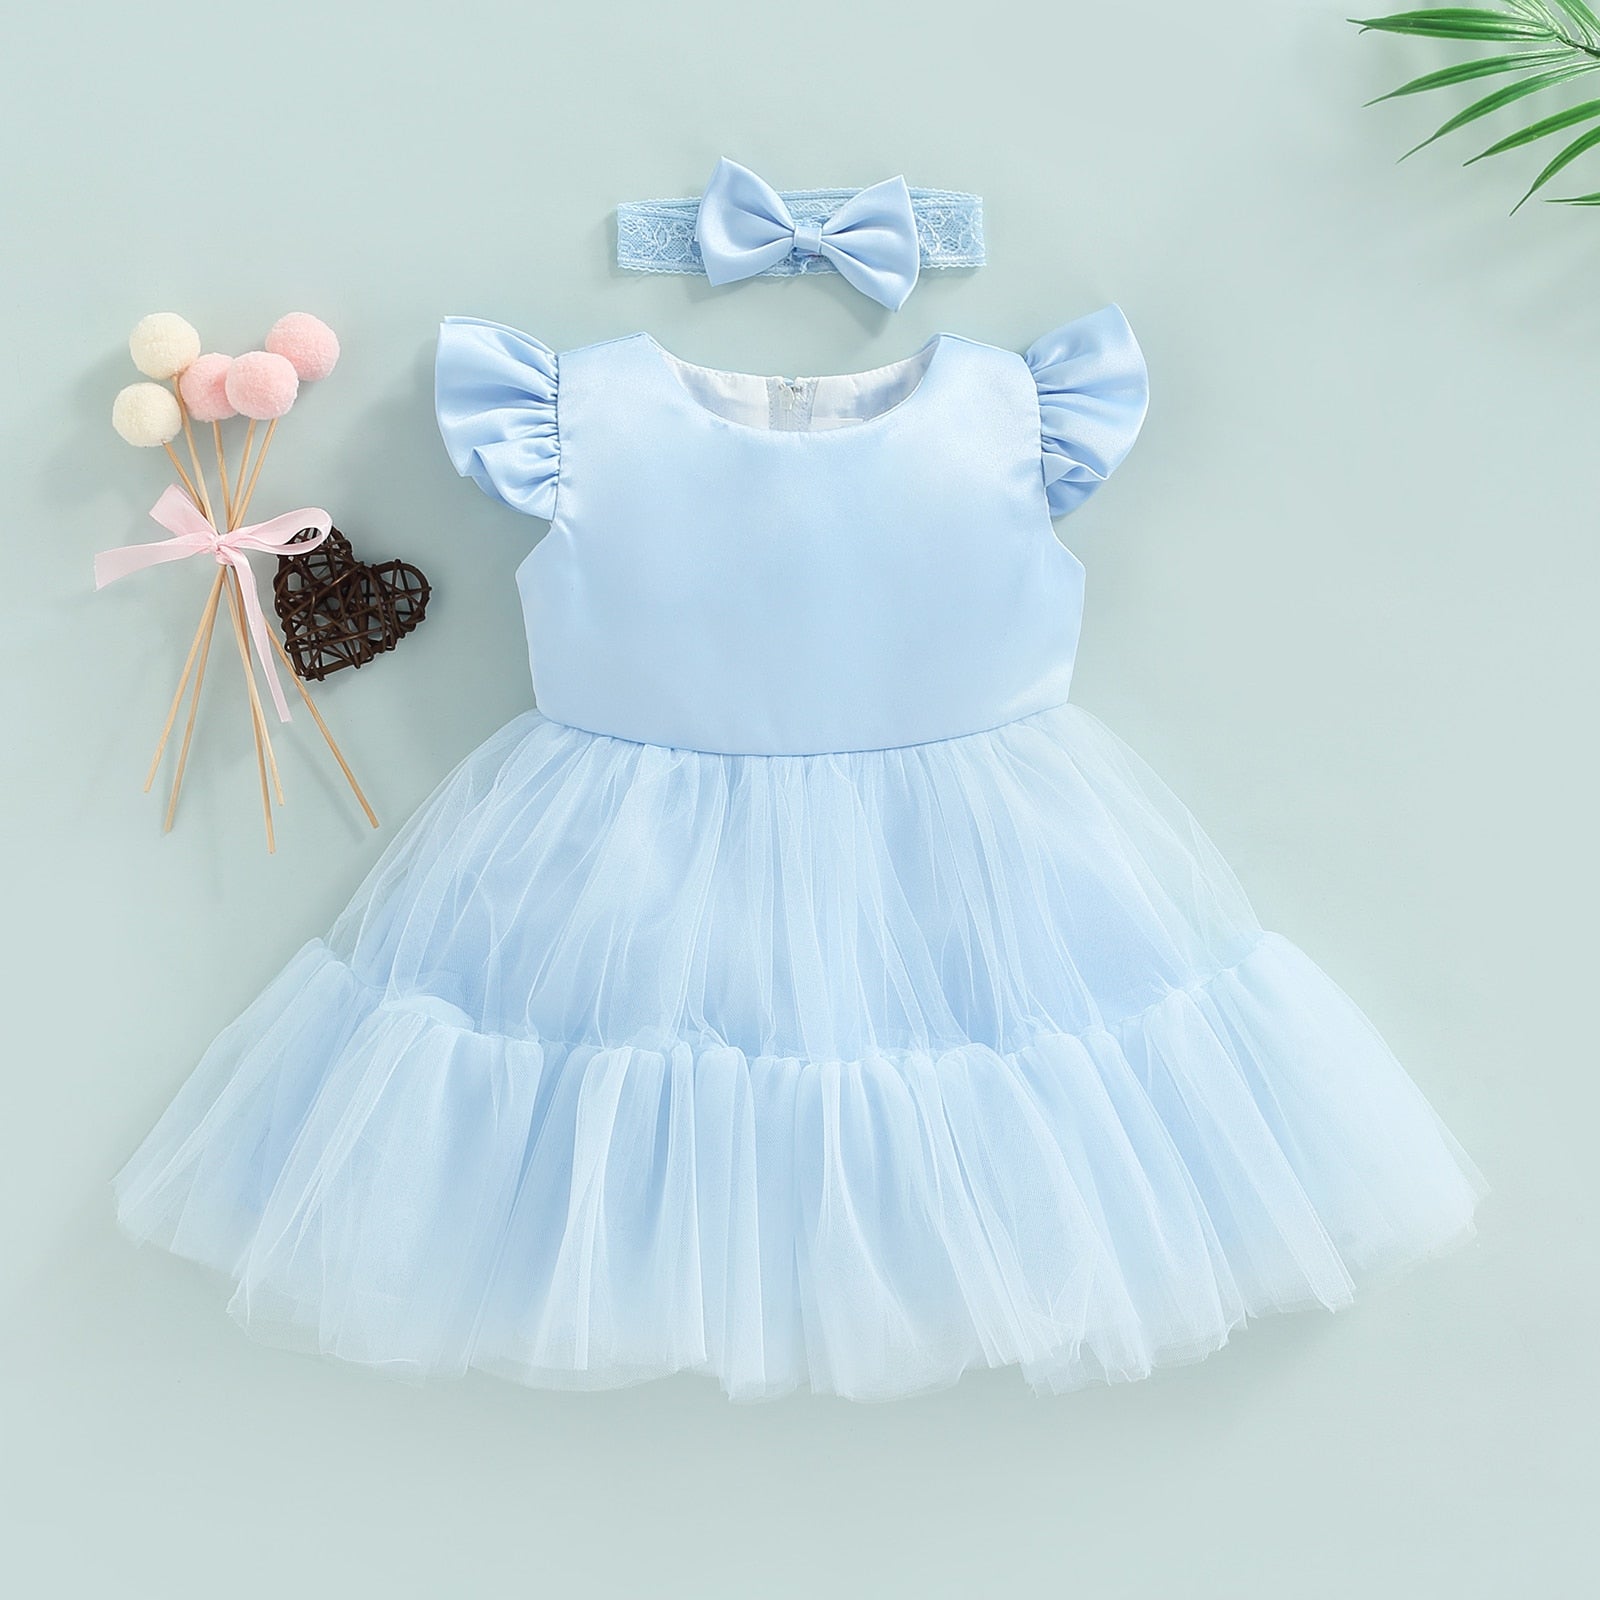 Vestido Infantil + Lacinho Tule vestido Loja Click Certo Azul 2-3 anos 57cm 